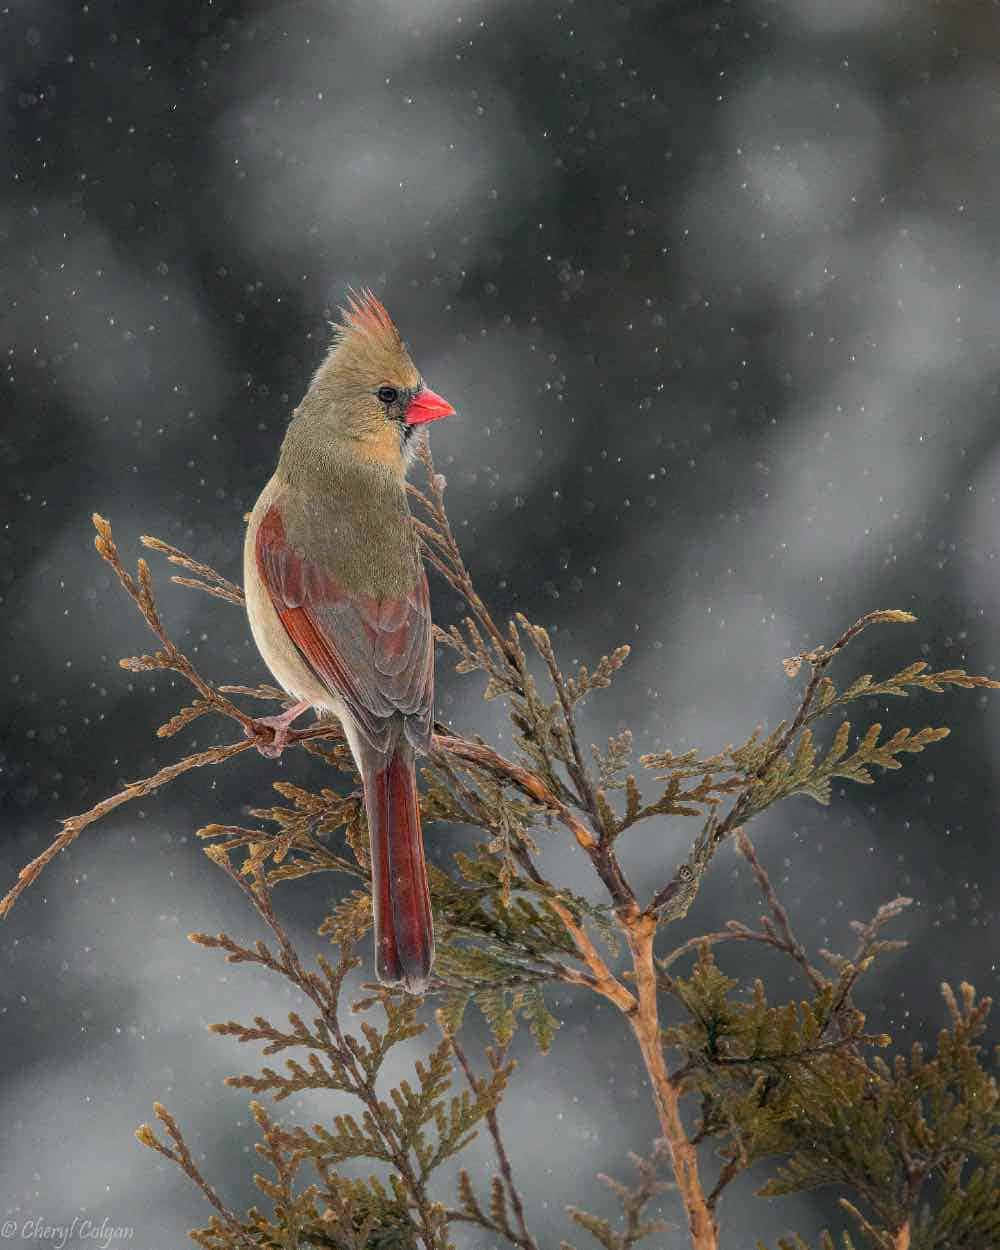 A vibrant cardinal perched atop a branch